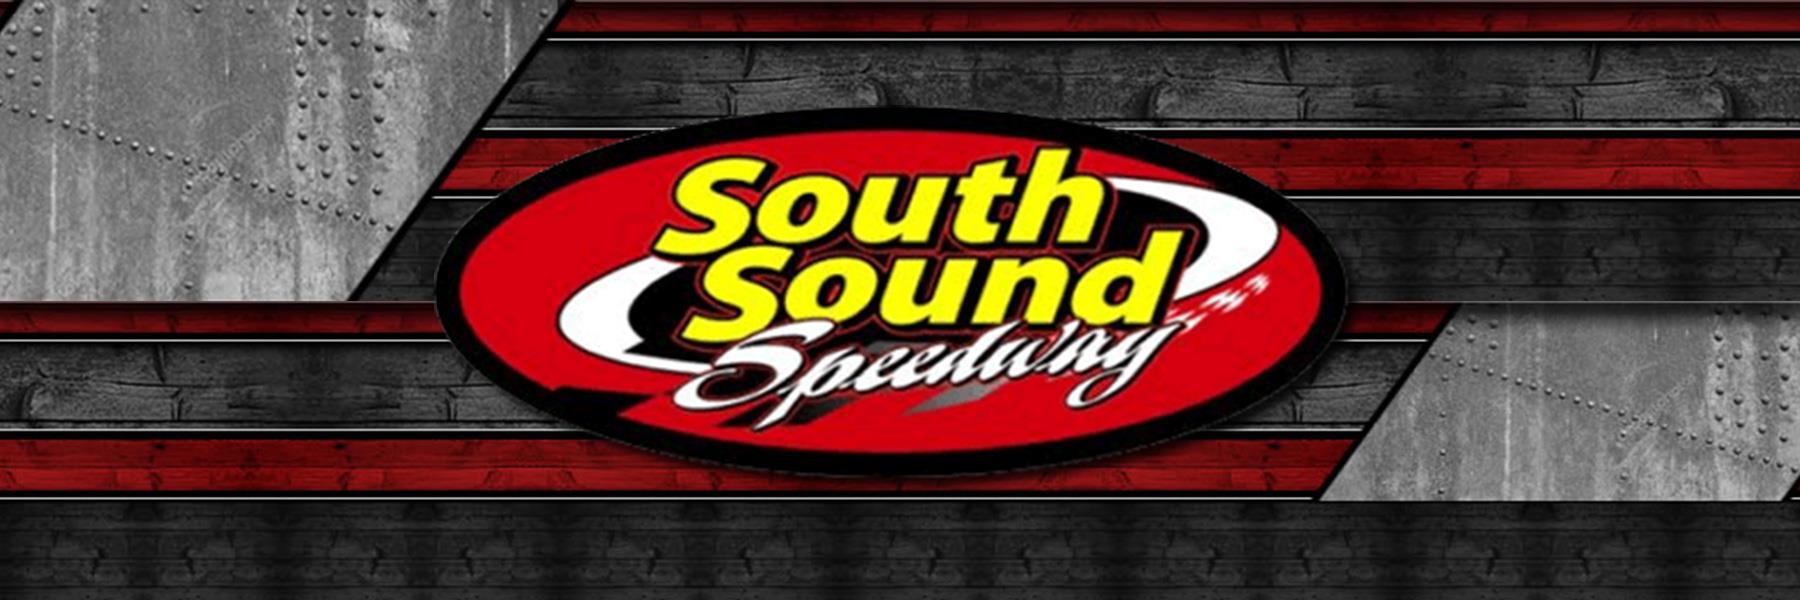 8/6/2022 - South Sound Speedway